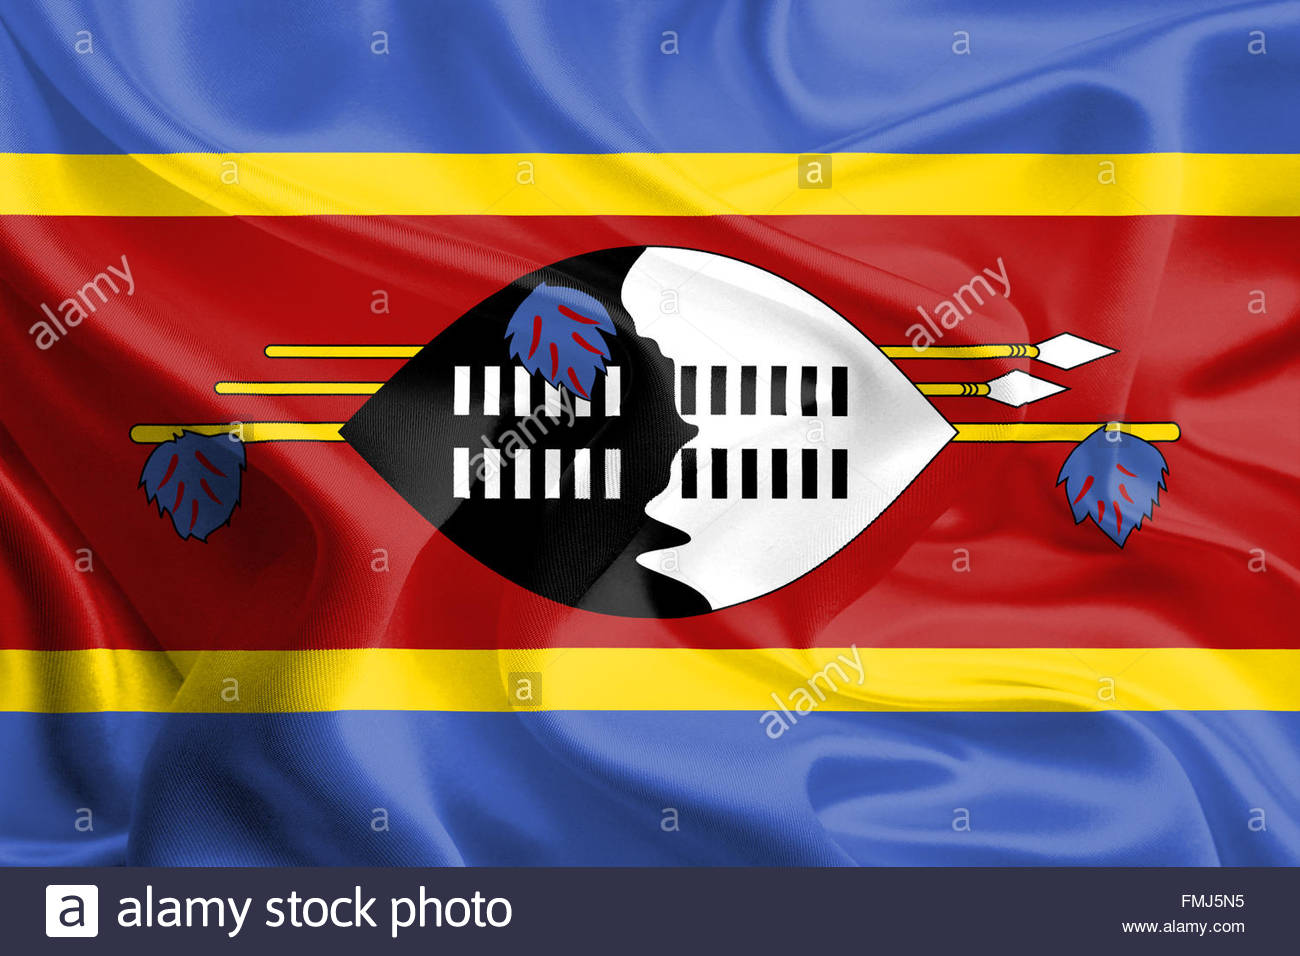 Waving Fabric Flag of Swaziland Stock Photo 98744609 Alamy